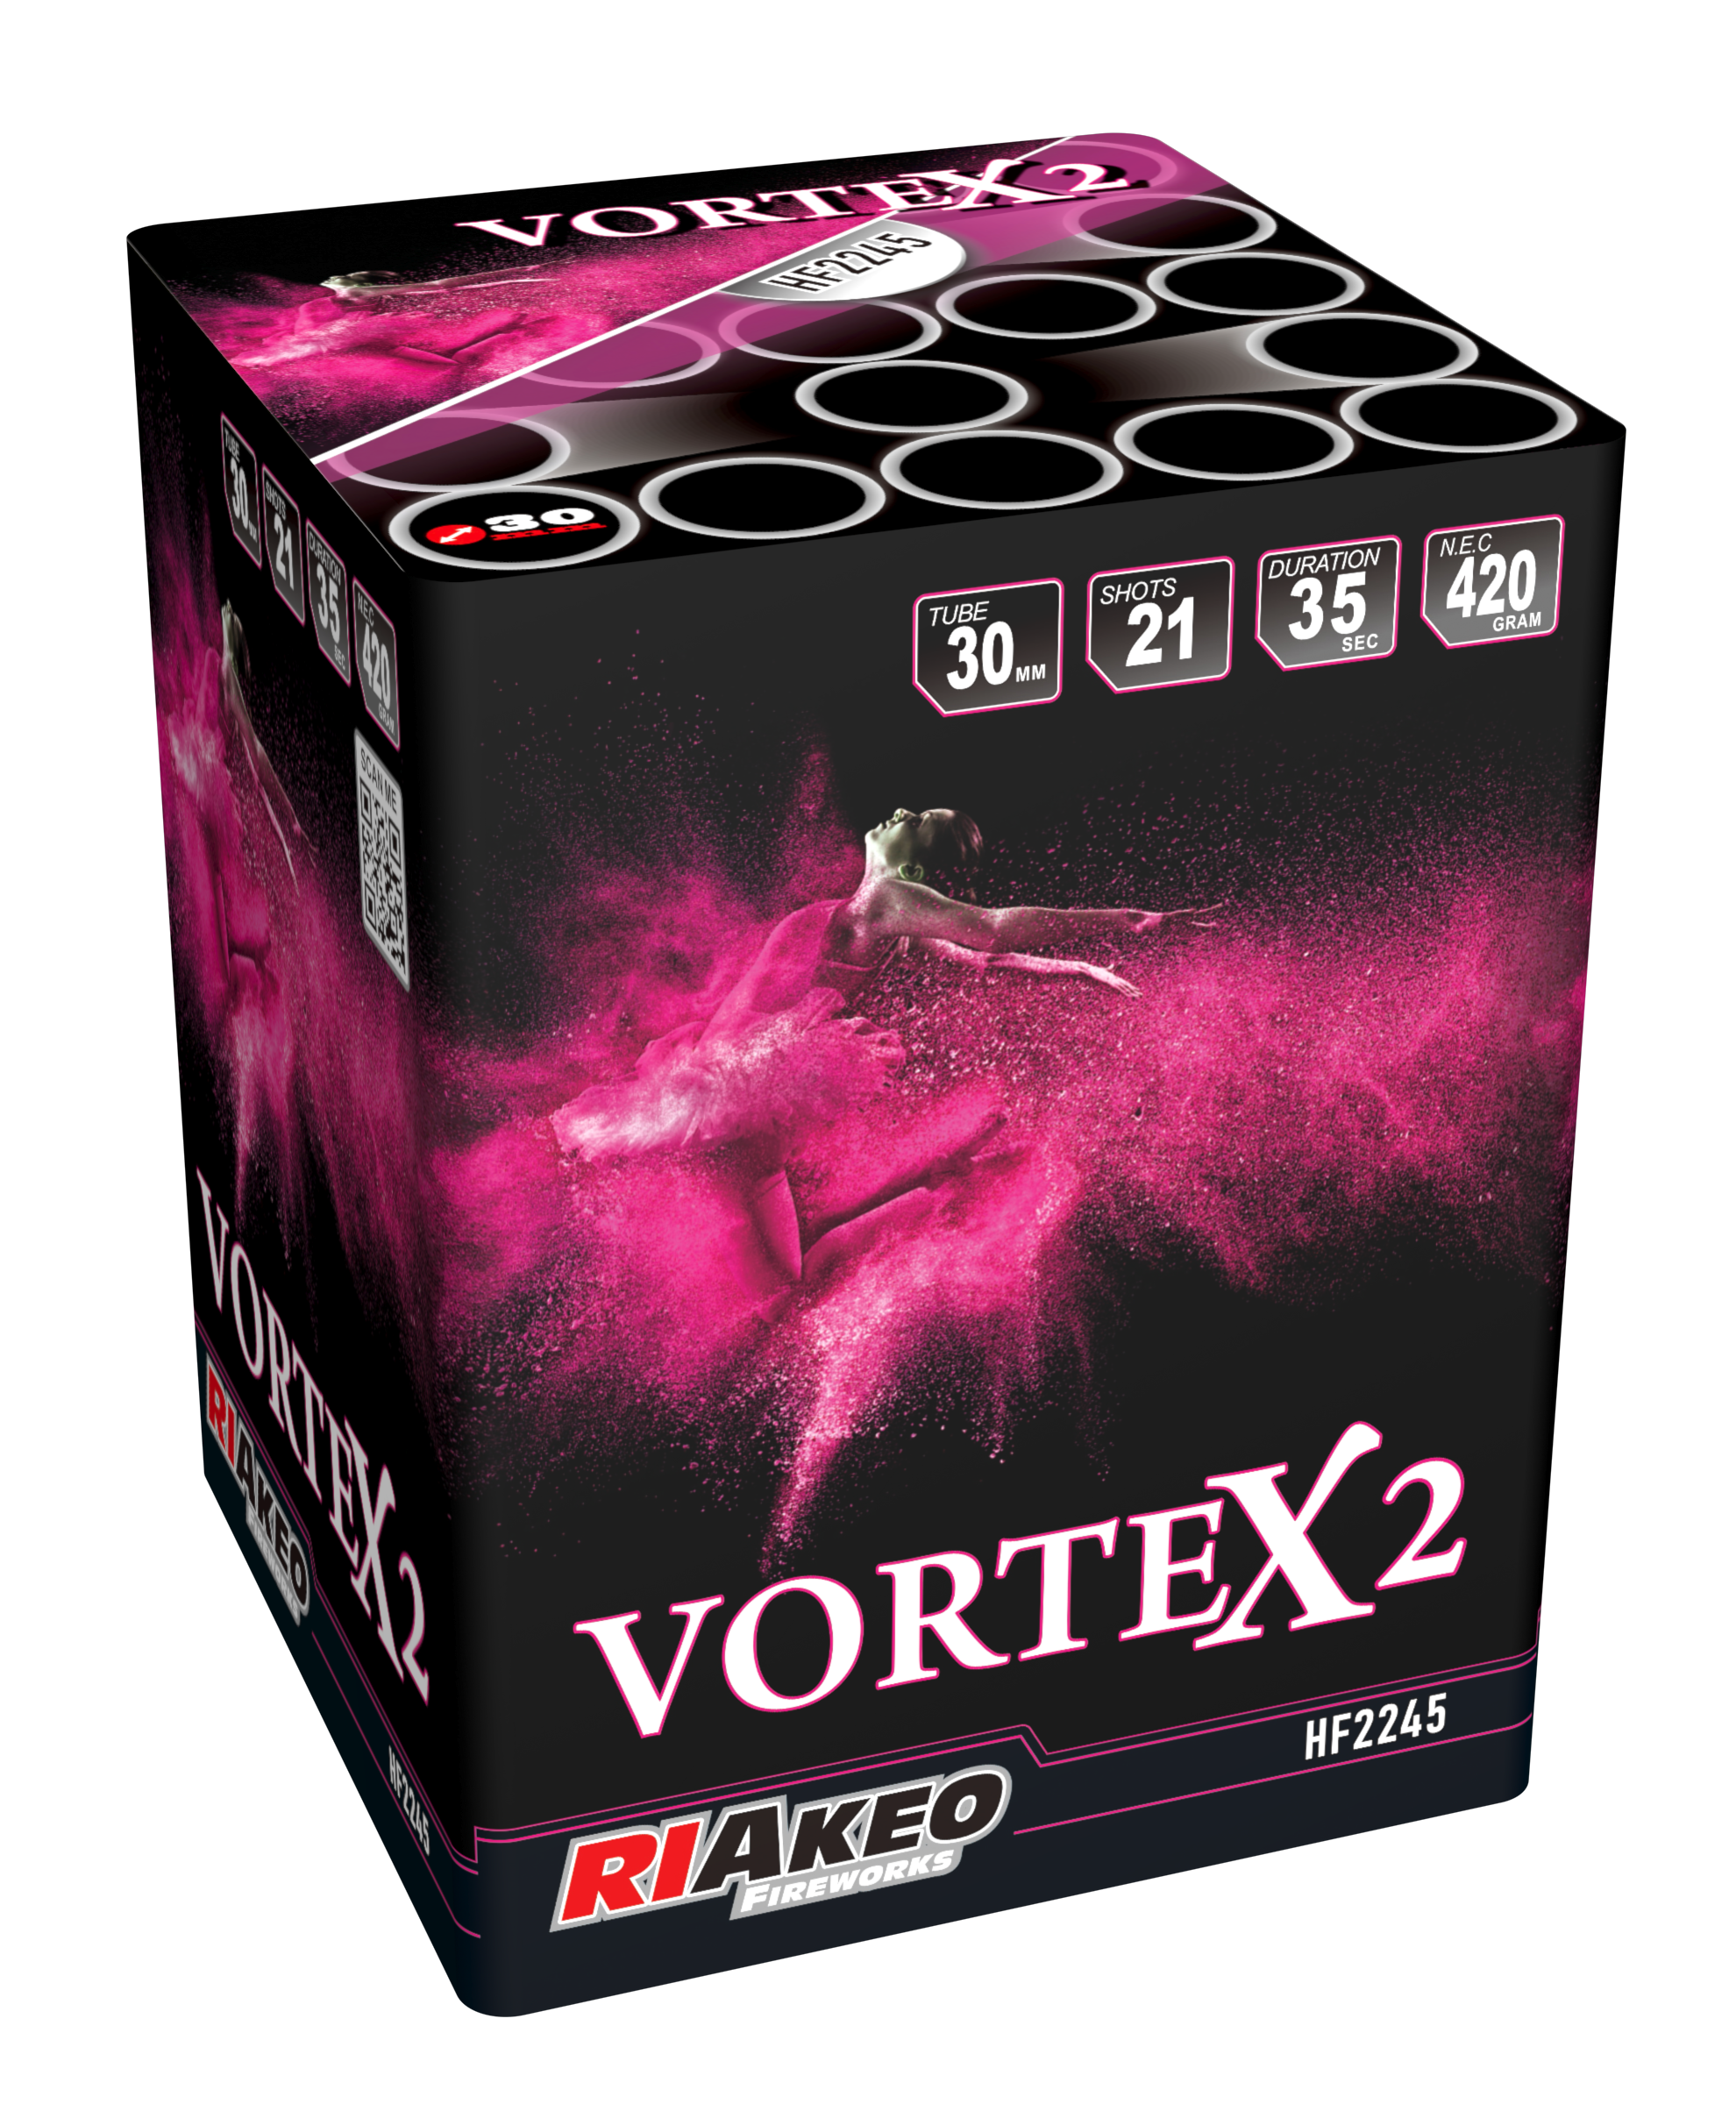 Riakeo Vortex 2 – 21 Coups Compact